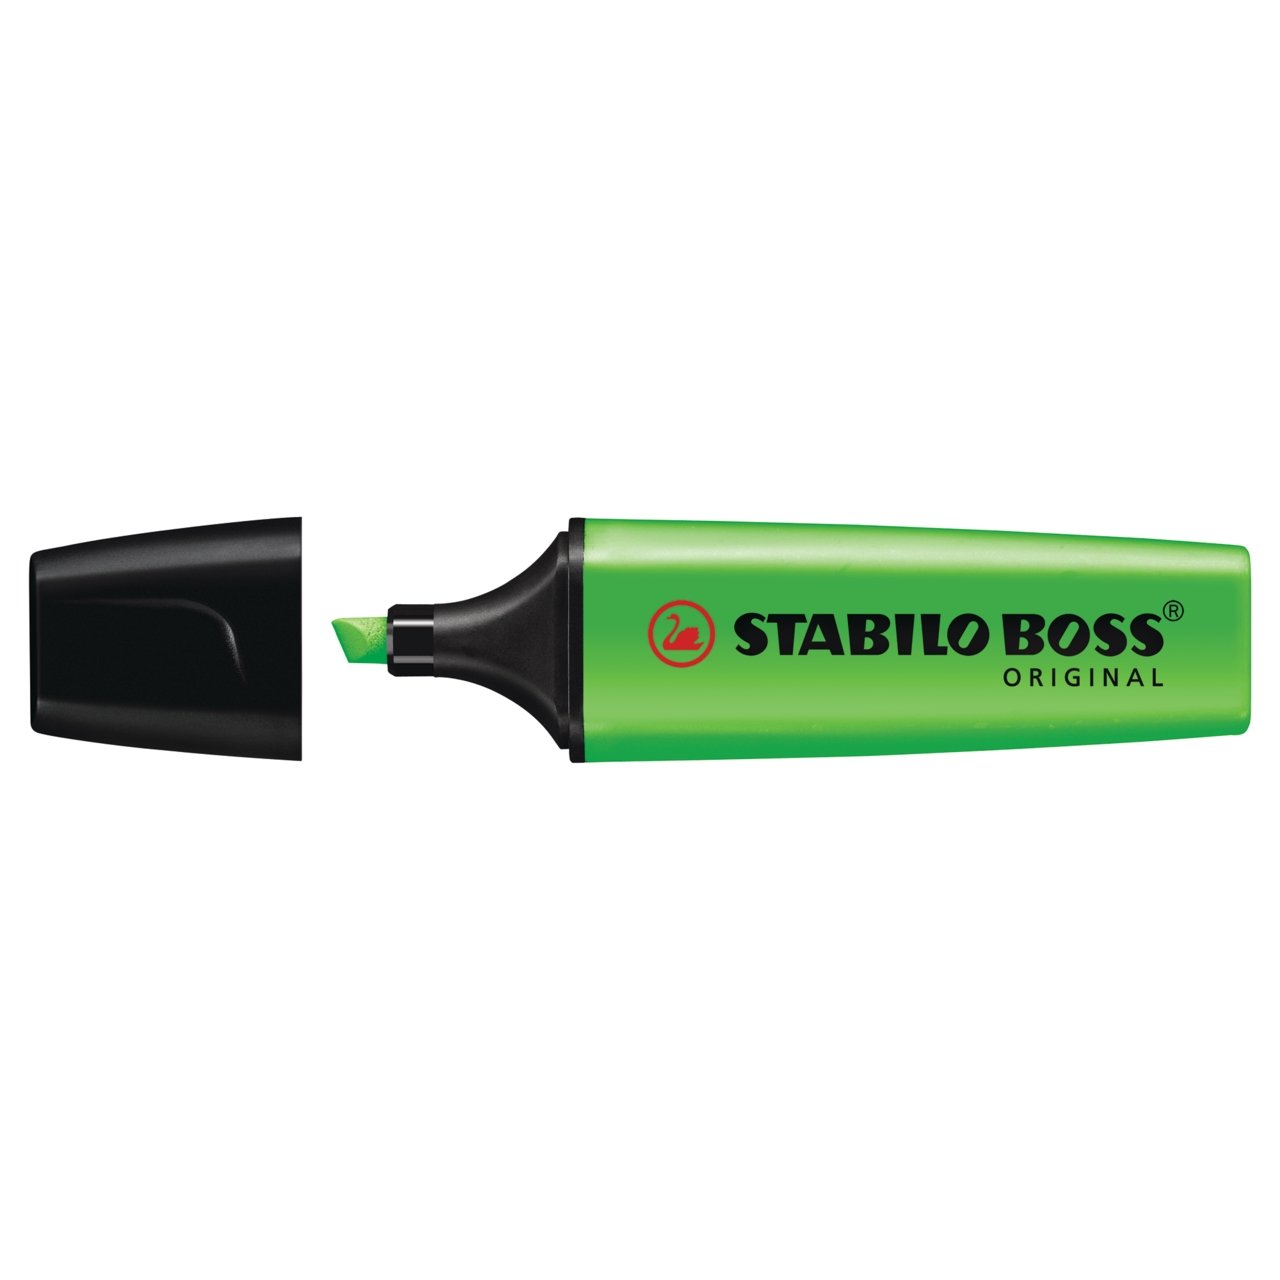 Stabilo BOSS Original Highlighter - Green - merriartist.com